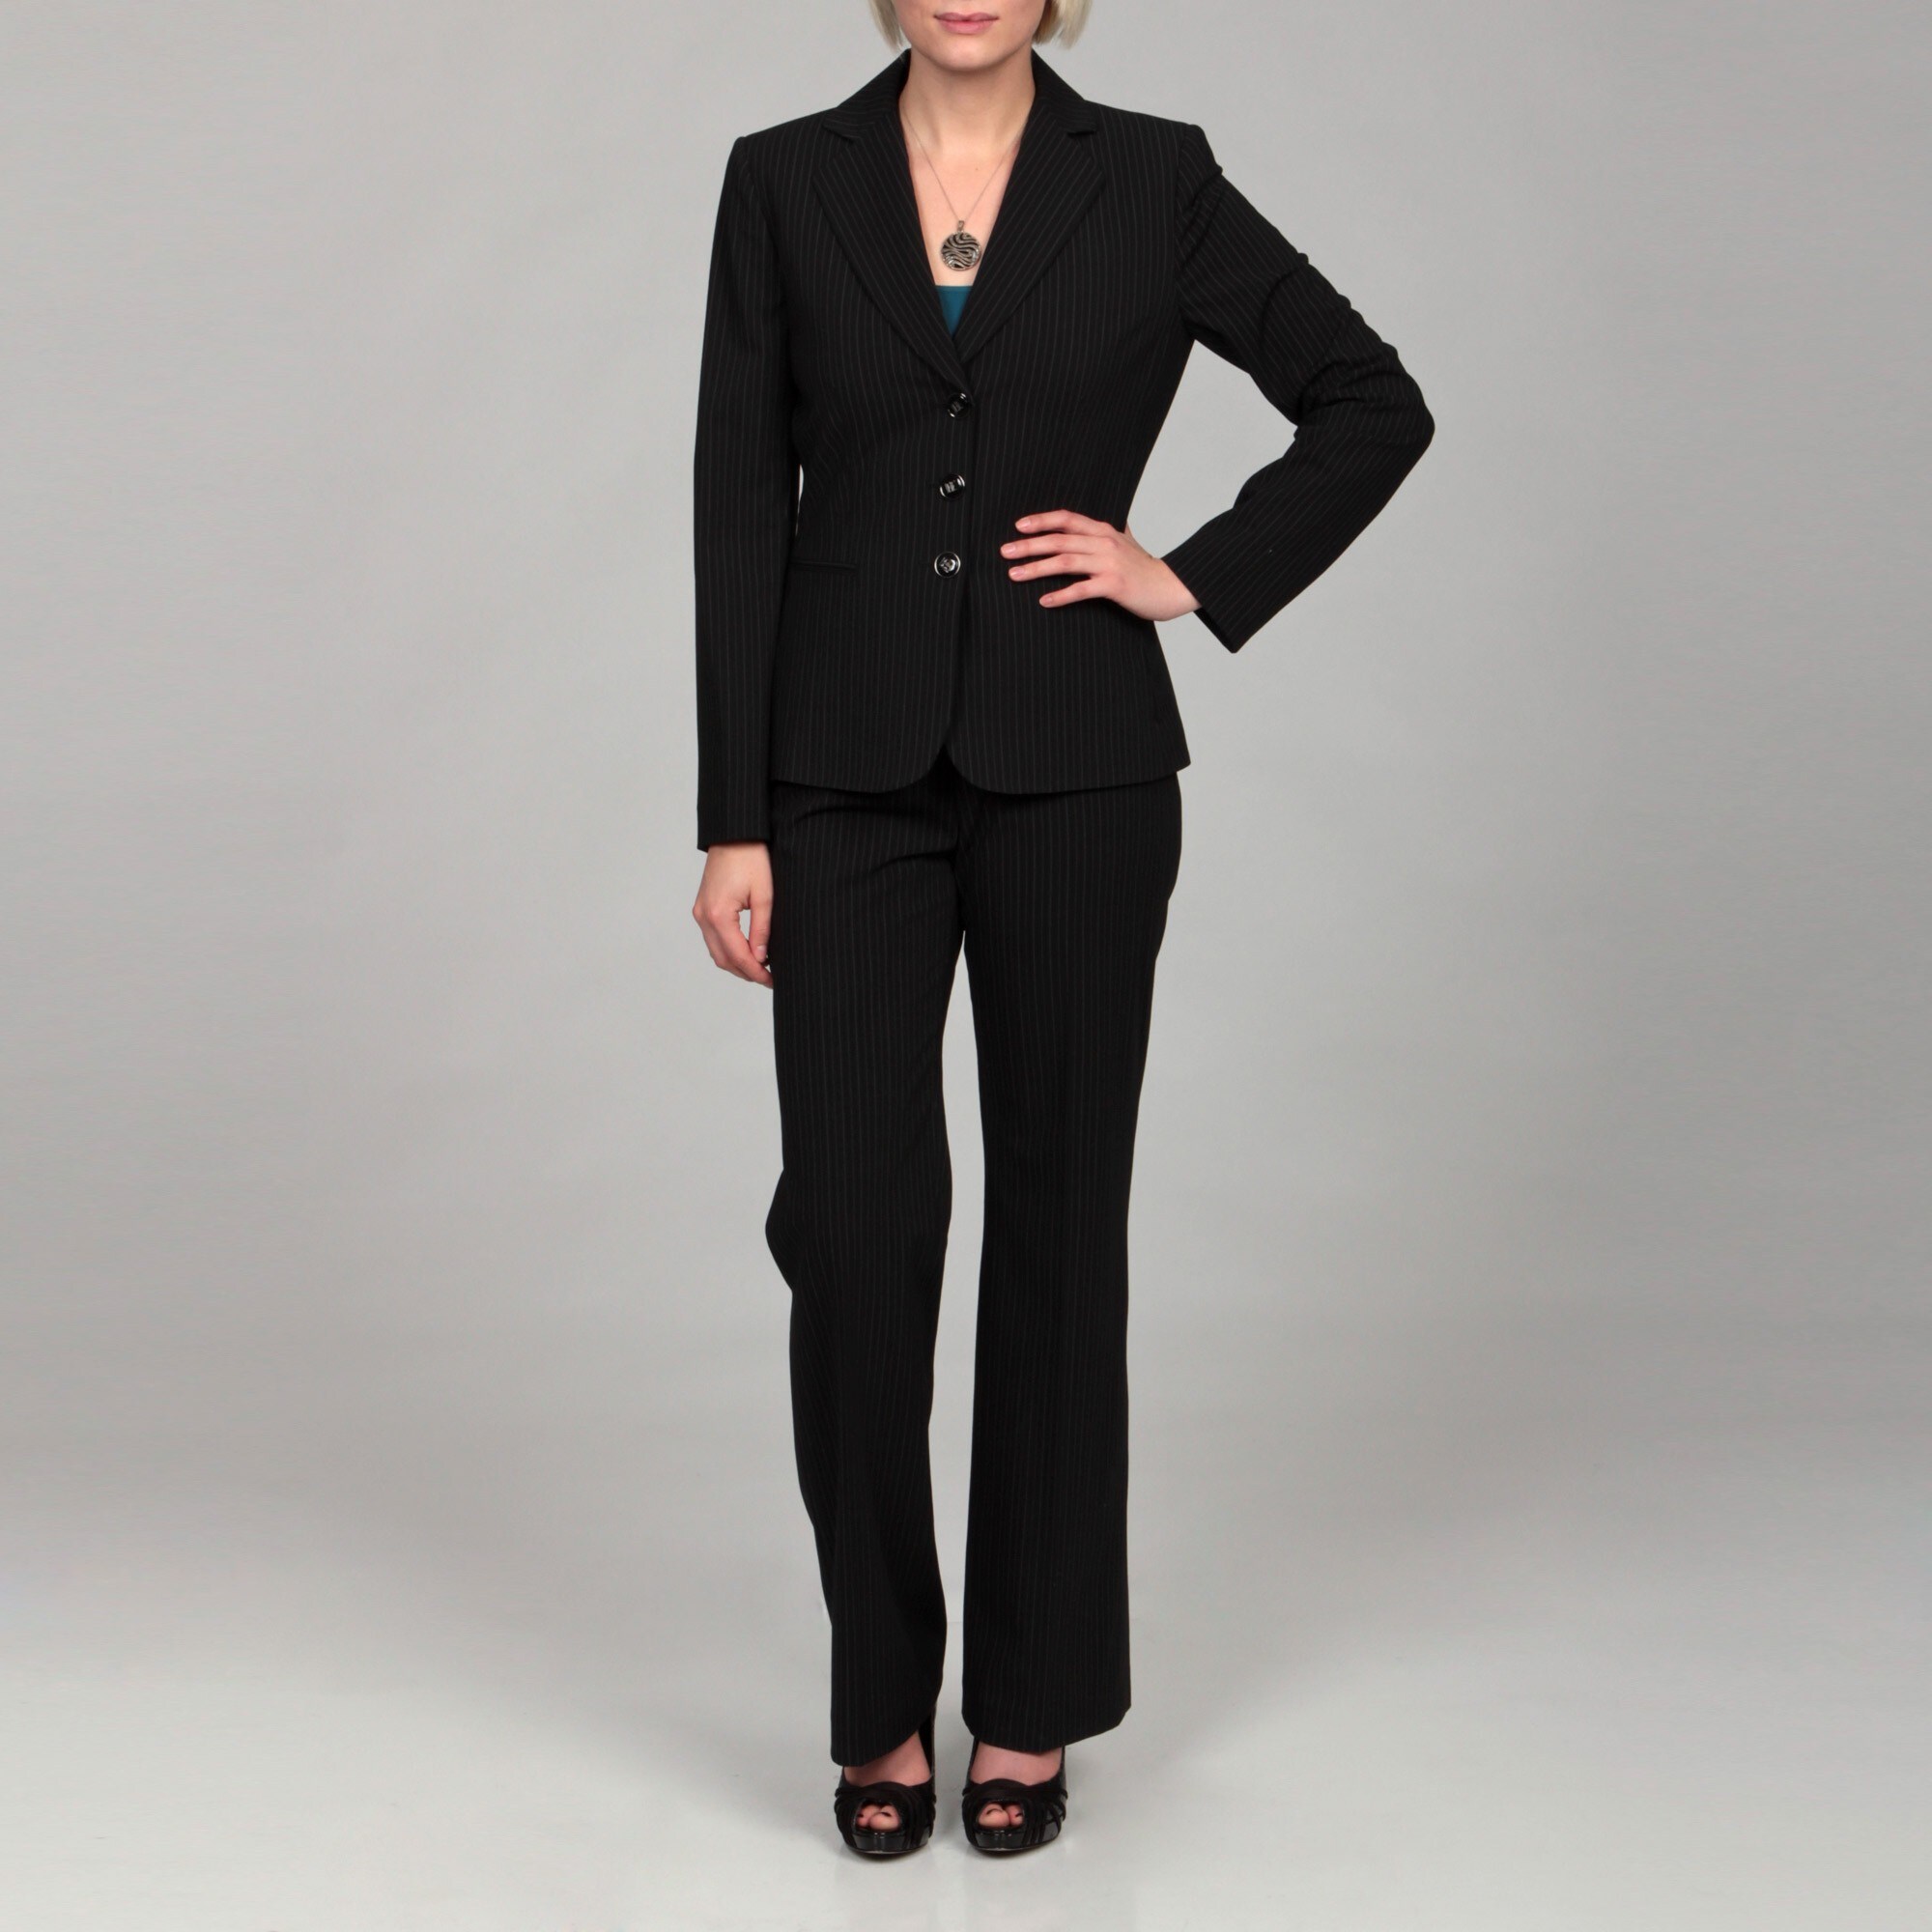 Tahari Women's Black/ White Pinstripe Pant Suit - Overstock Shopping ...